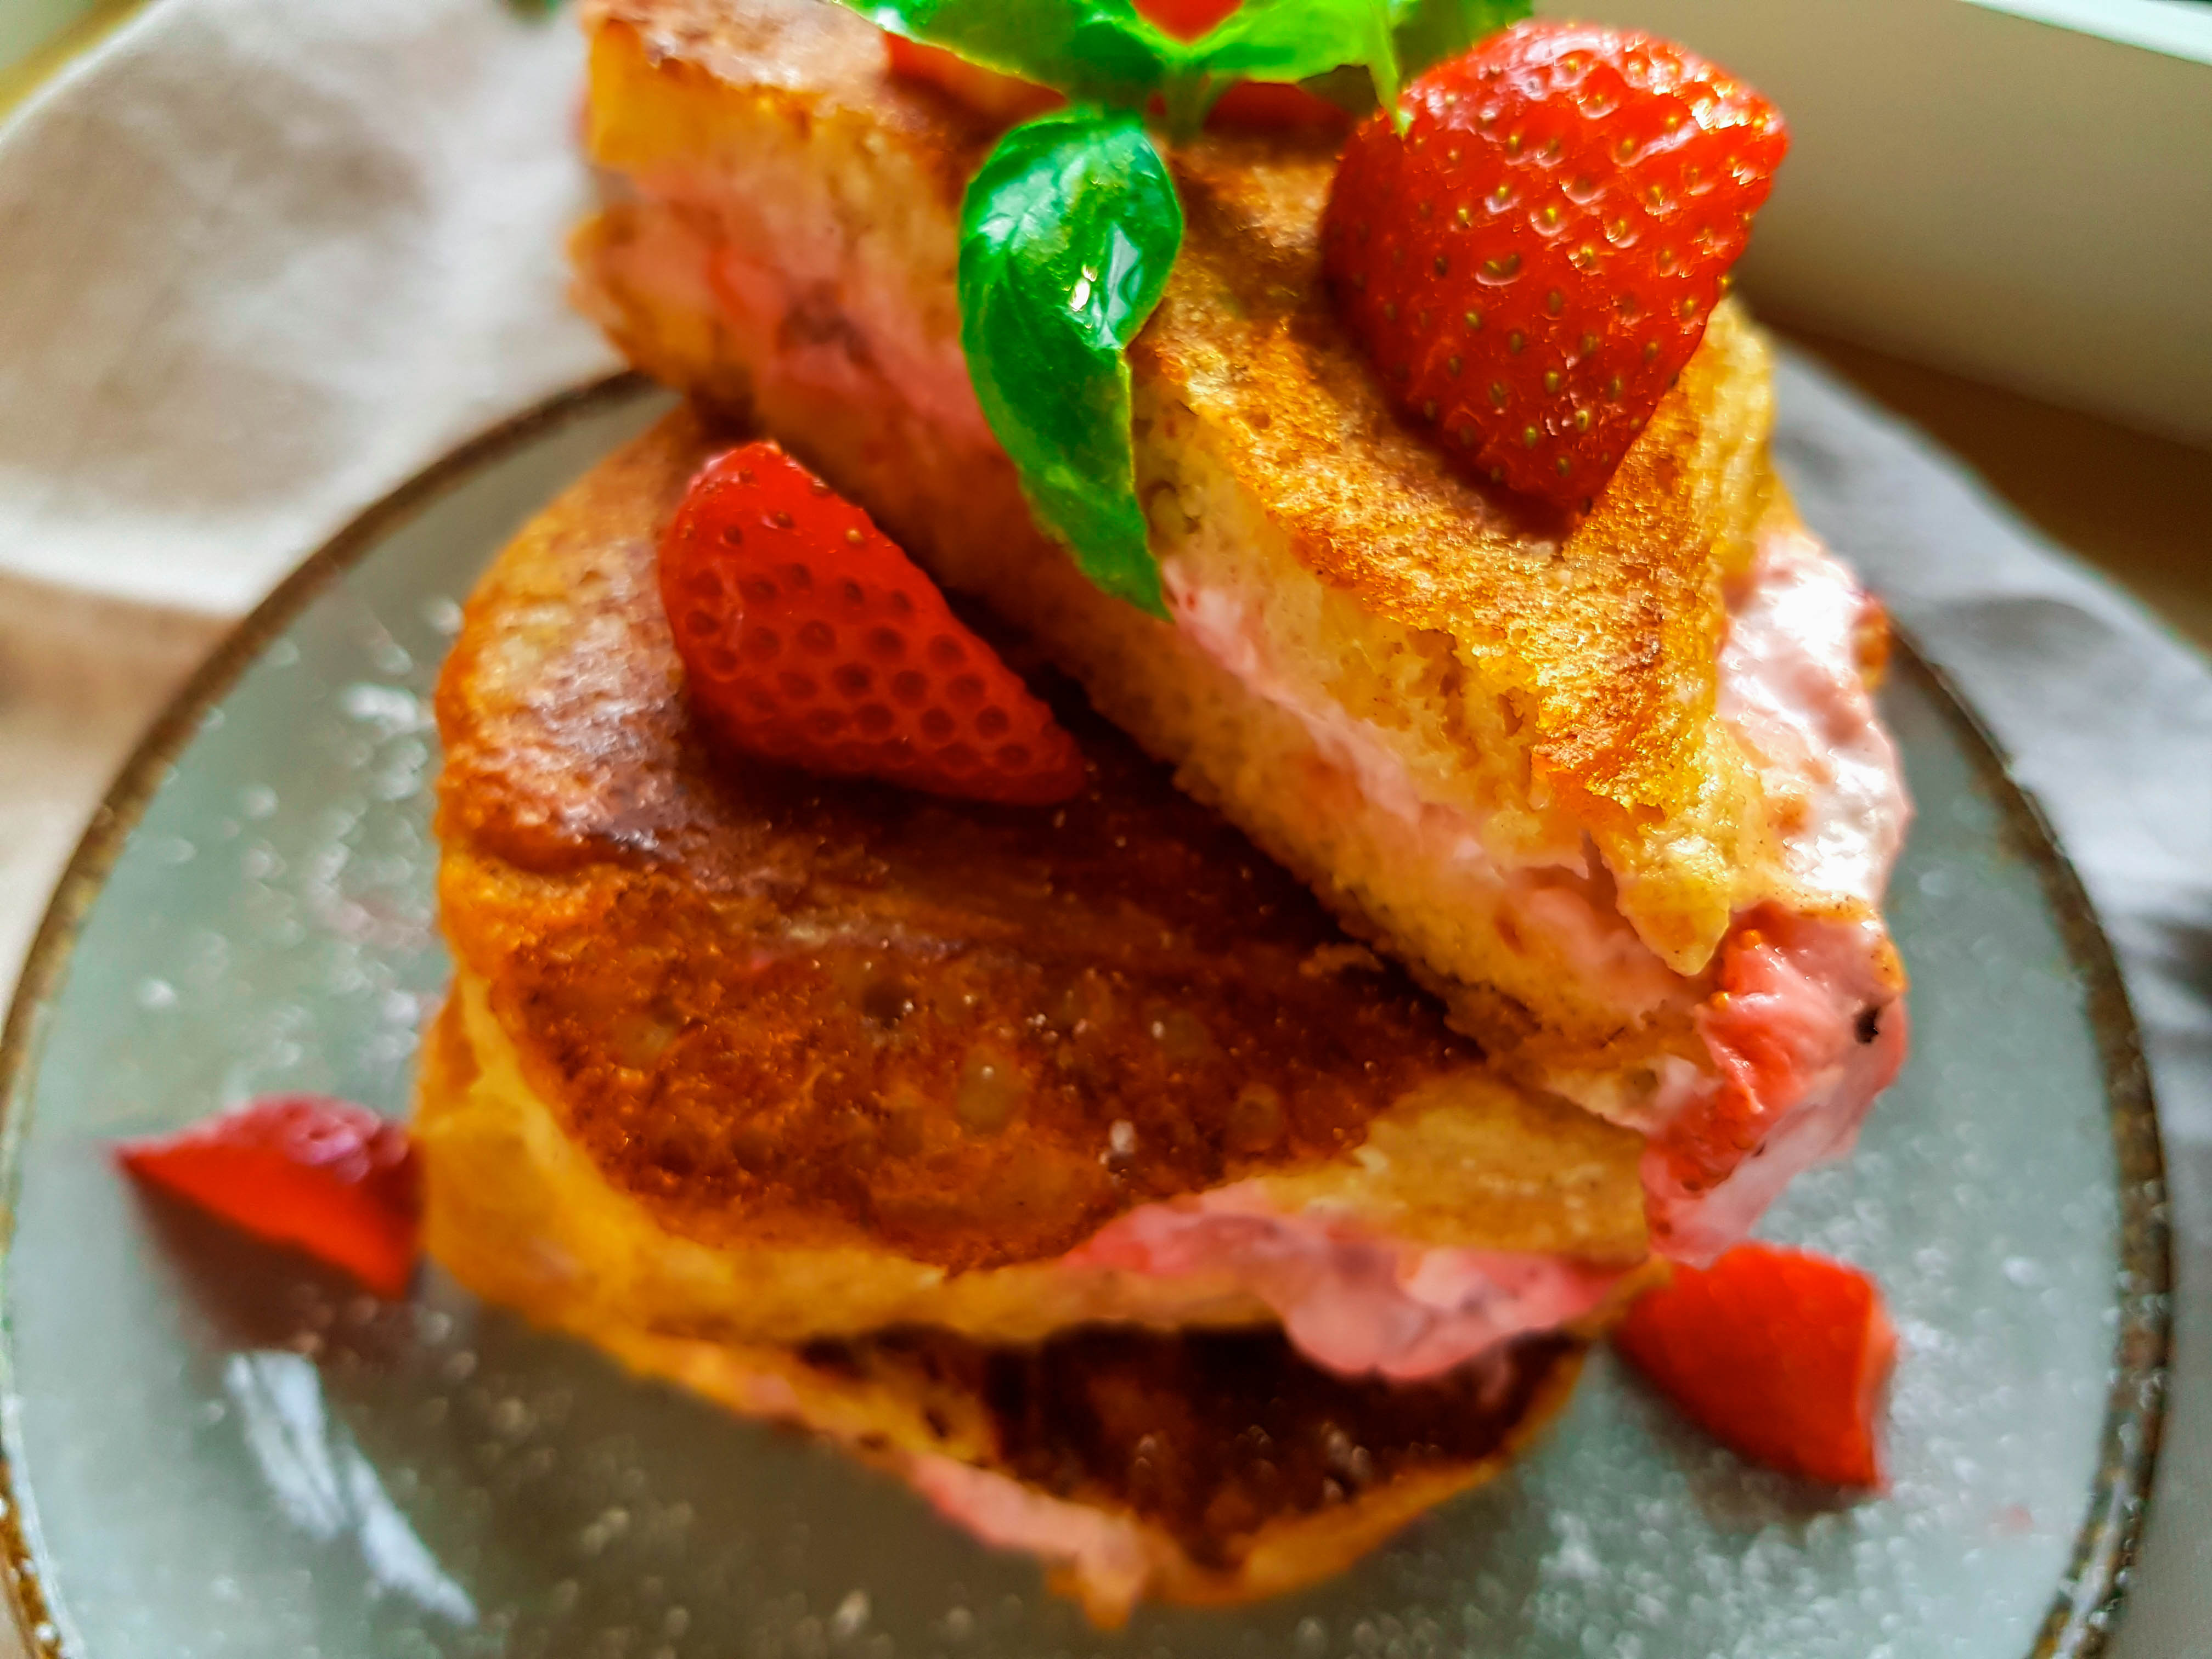 Strawberry cream cheese stuffed French toast